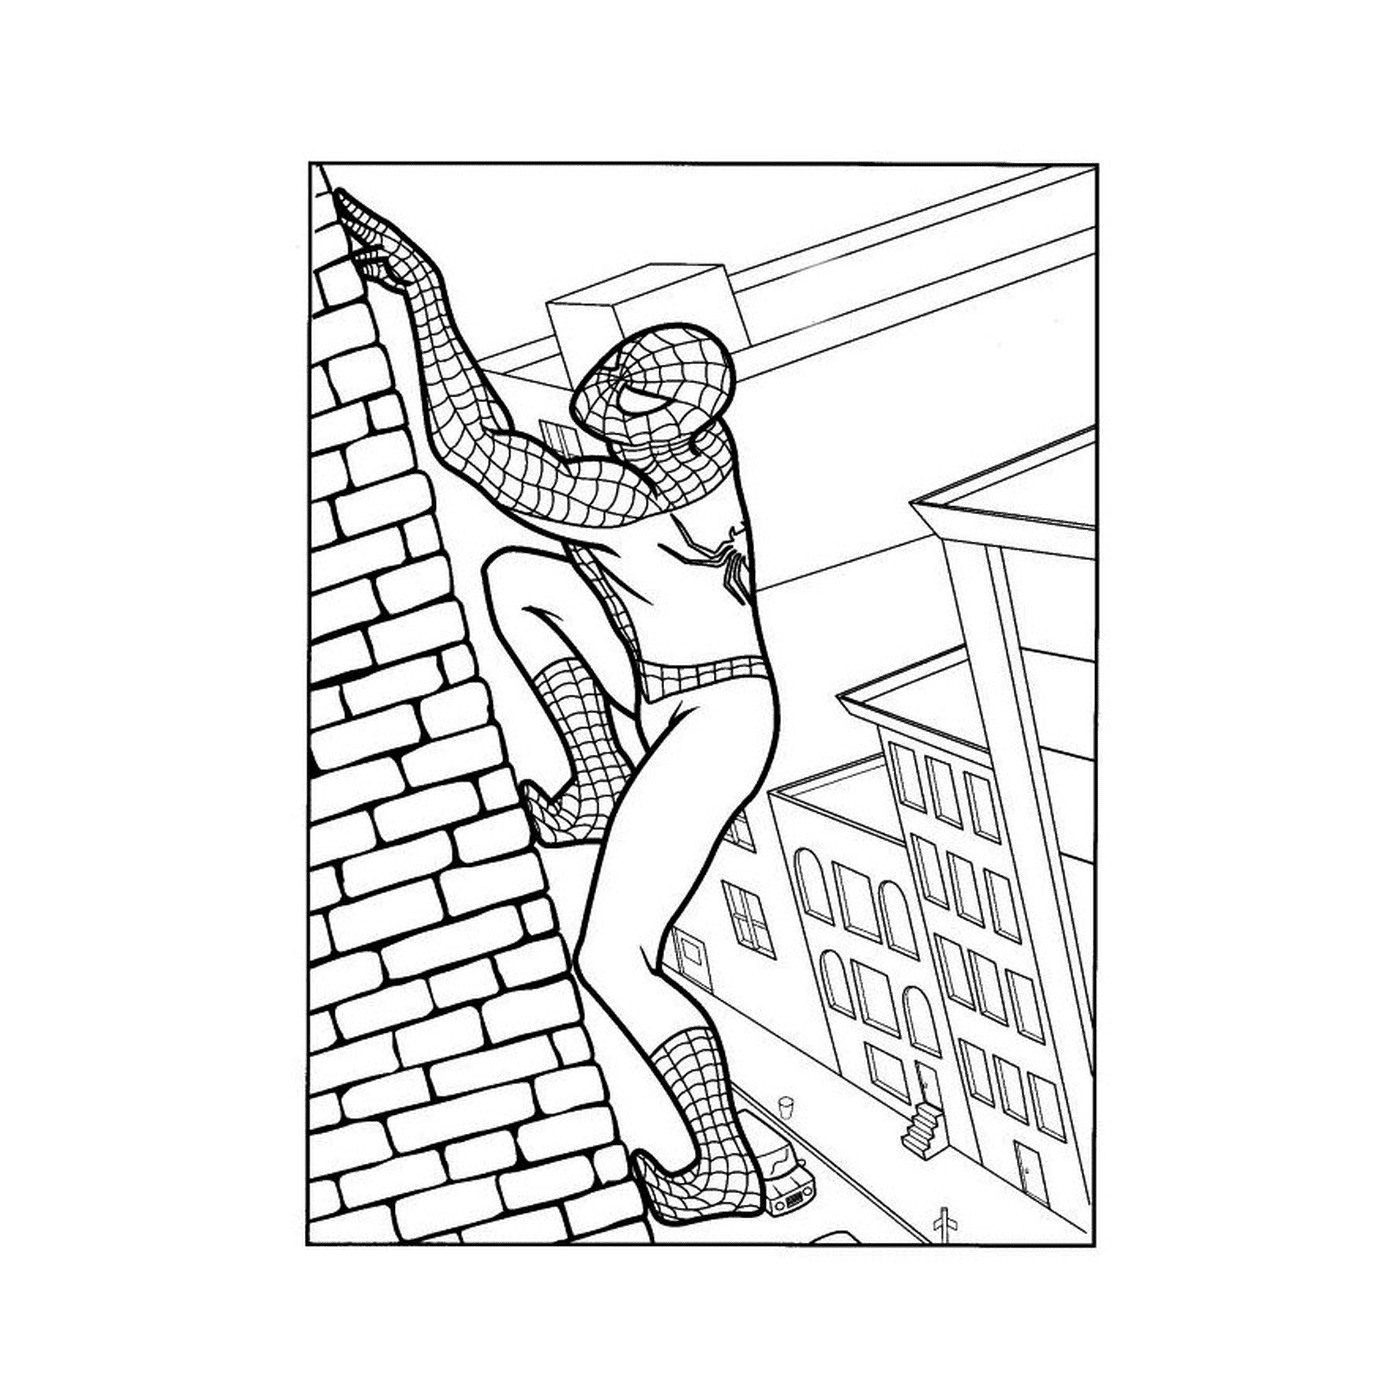  Spiderman climbs a wall 